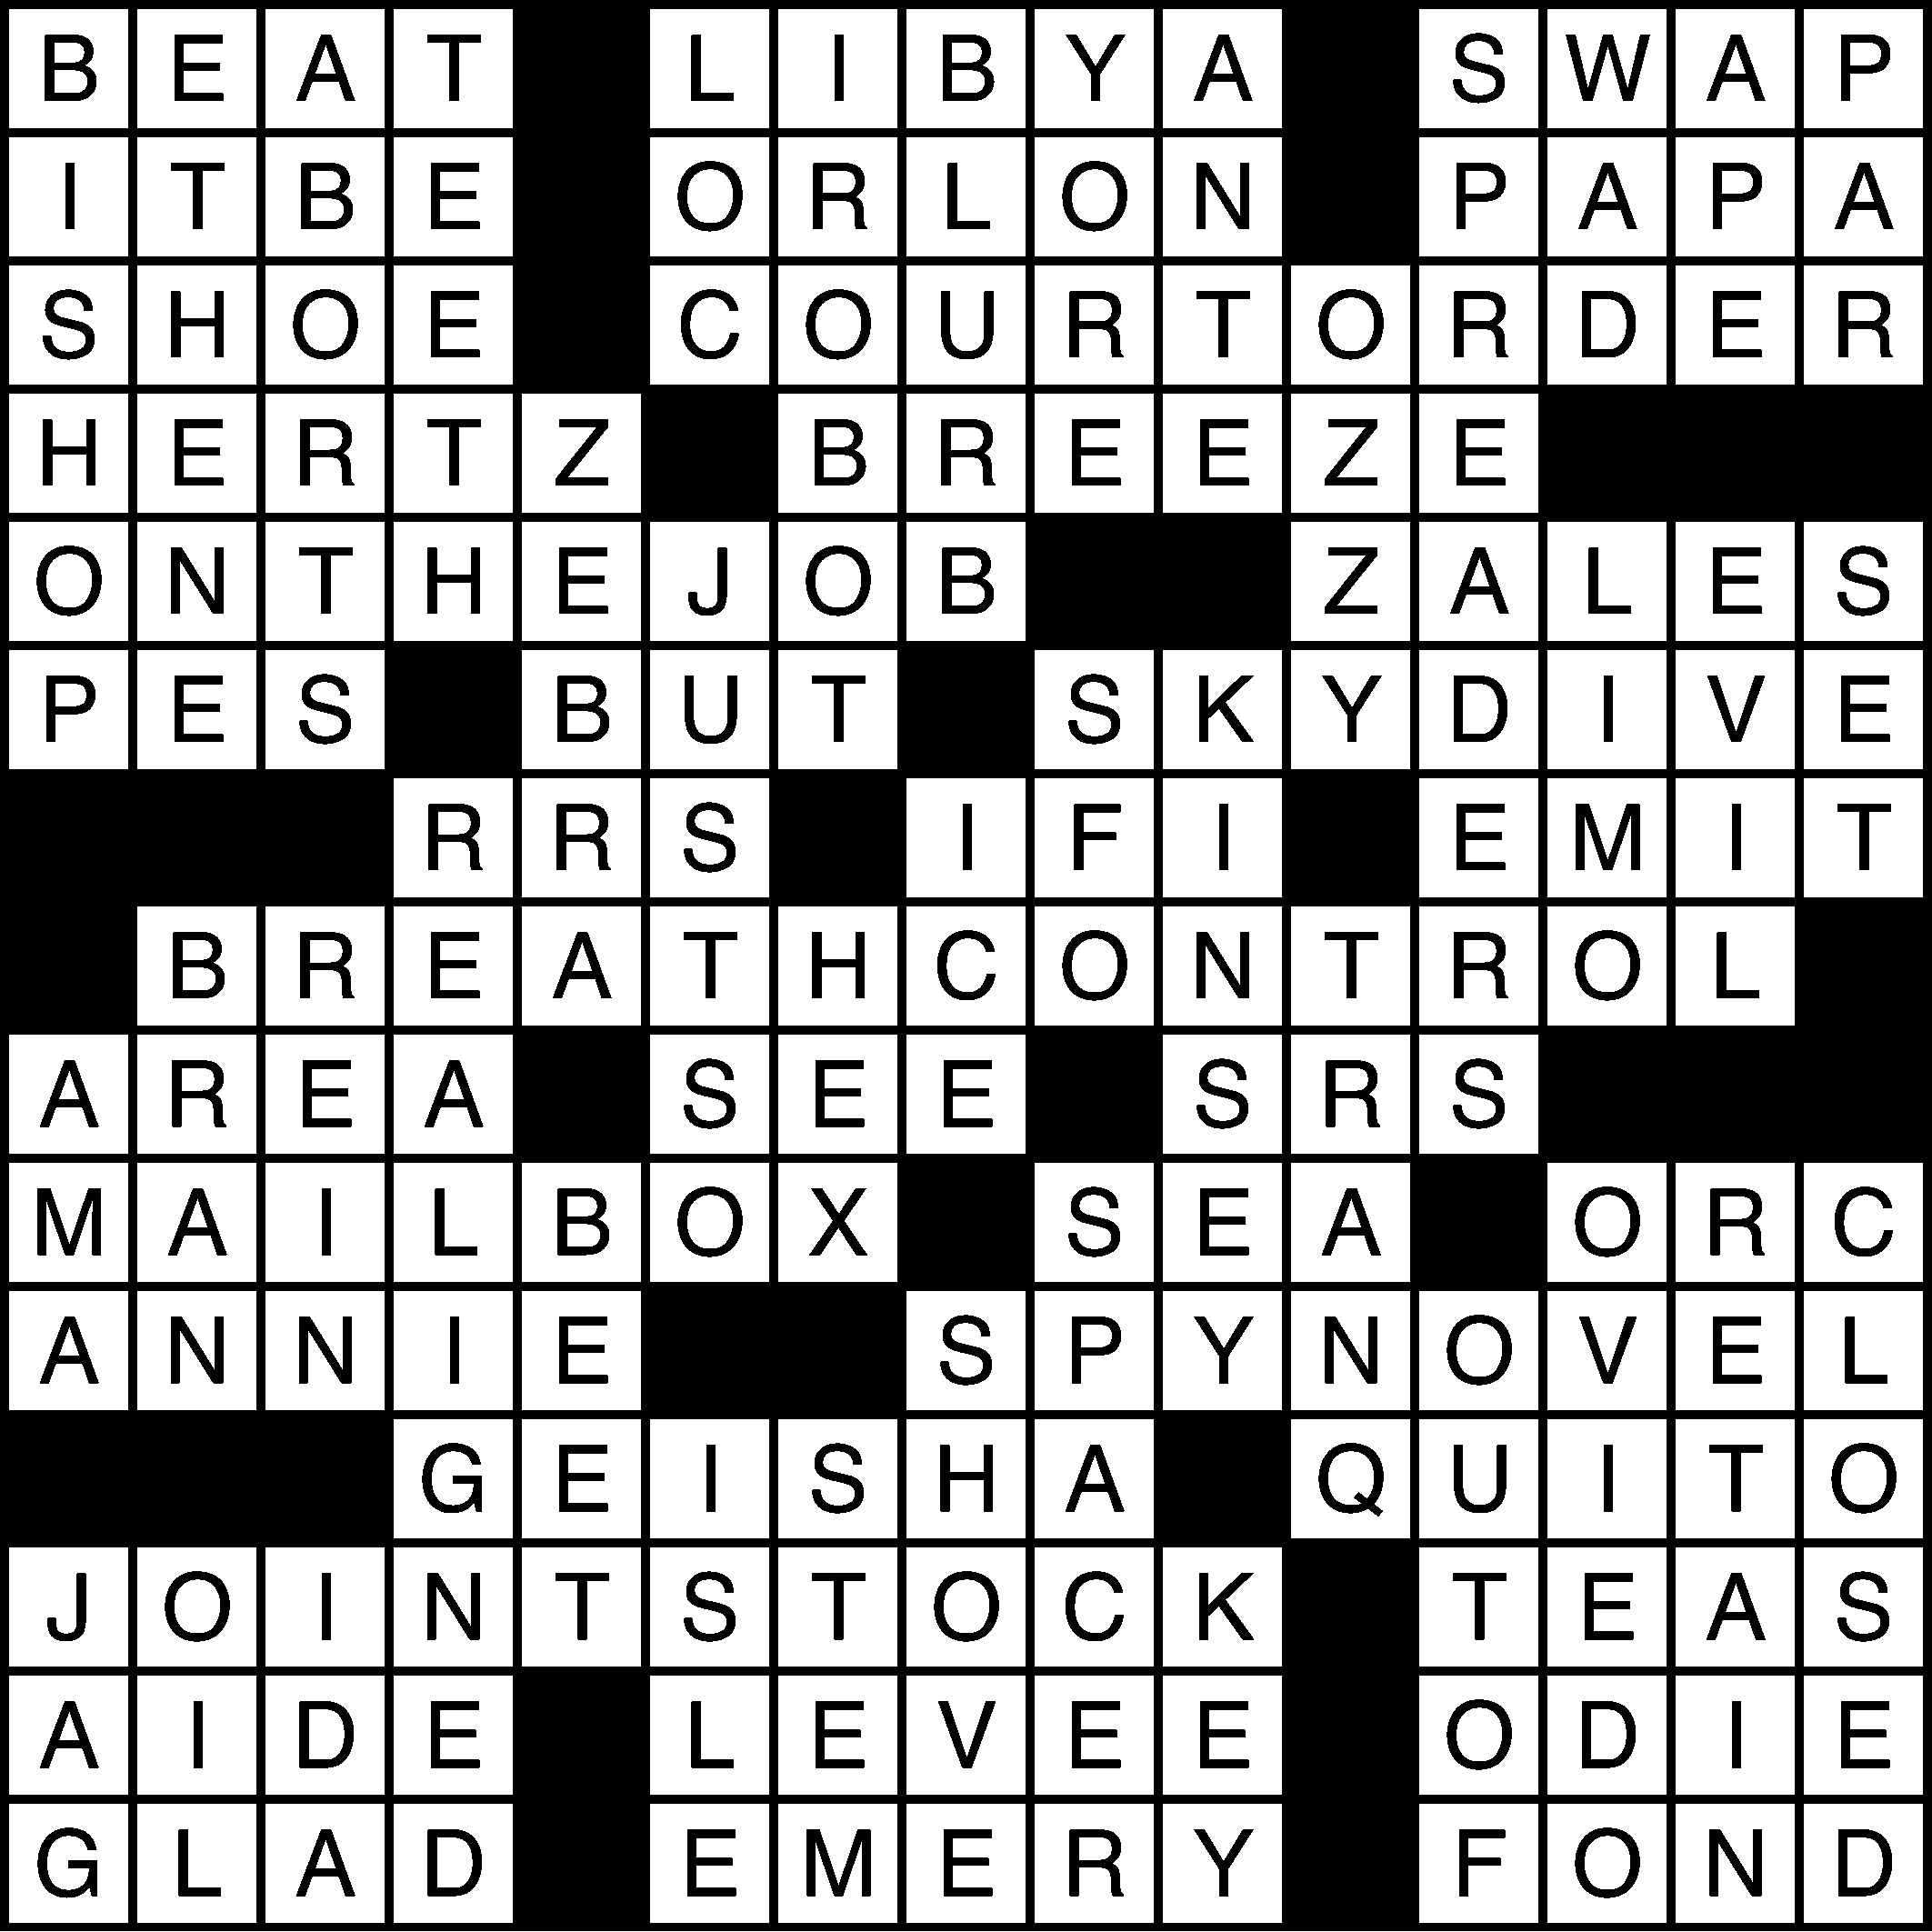 03/26/2014 Crossword: Answers